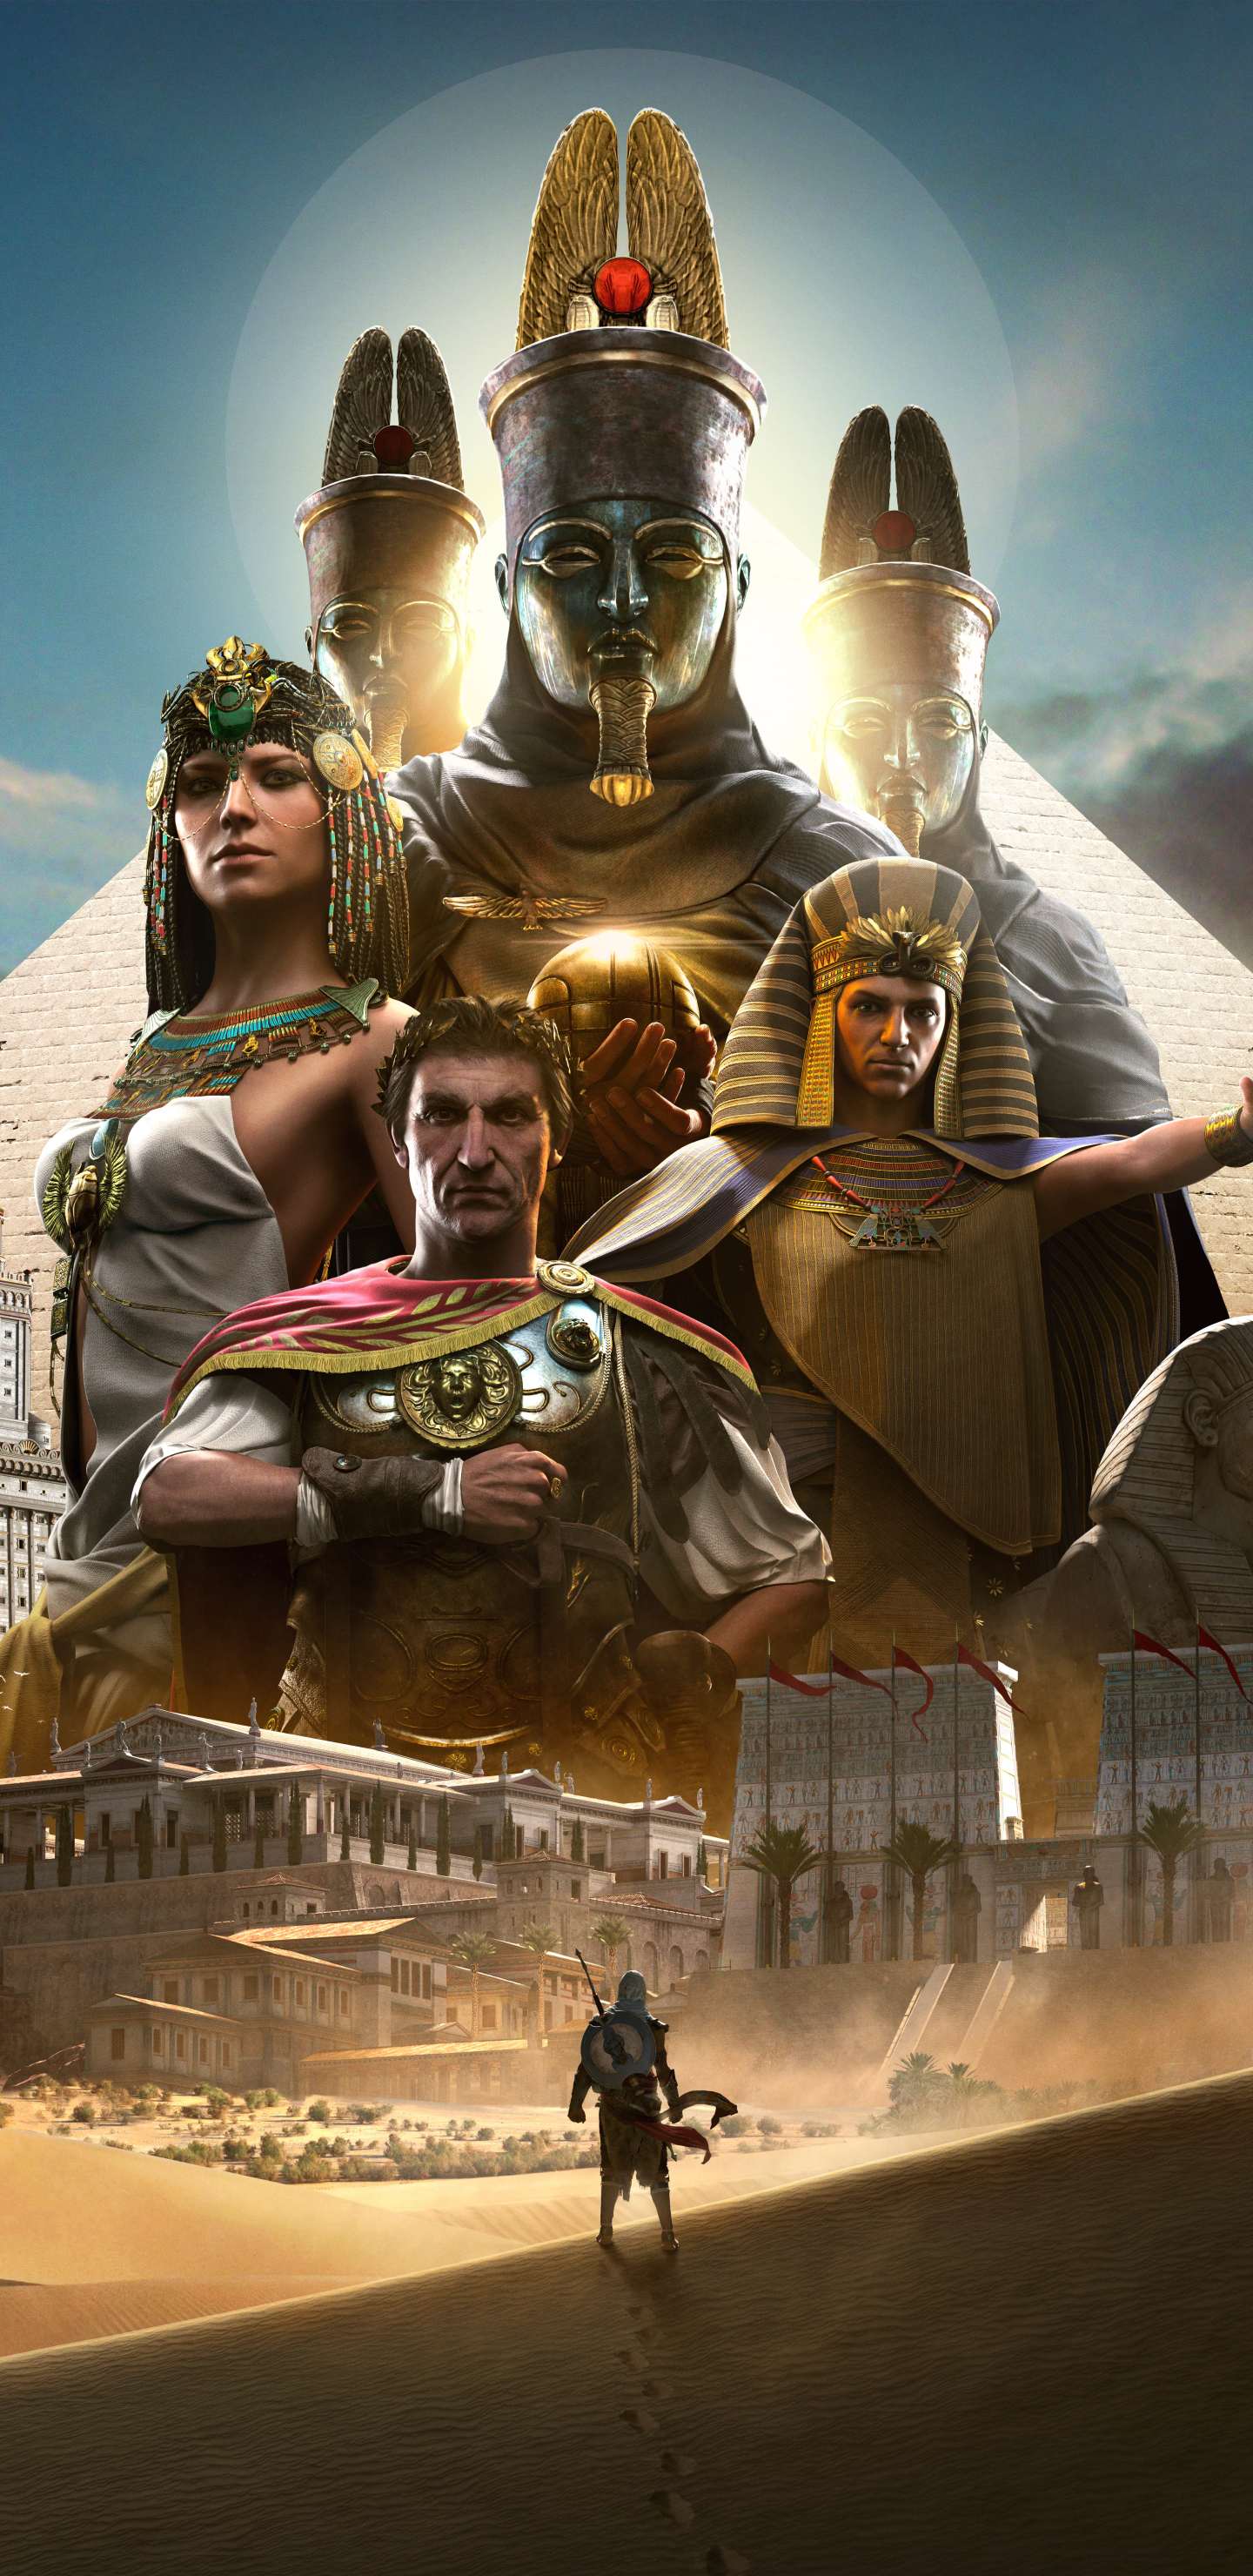 julius caesar, video game, assassin's creed origins, cleopatra, bayek of siwa, ptolemy xiii, assassin's creed